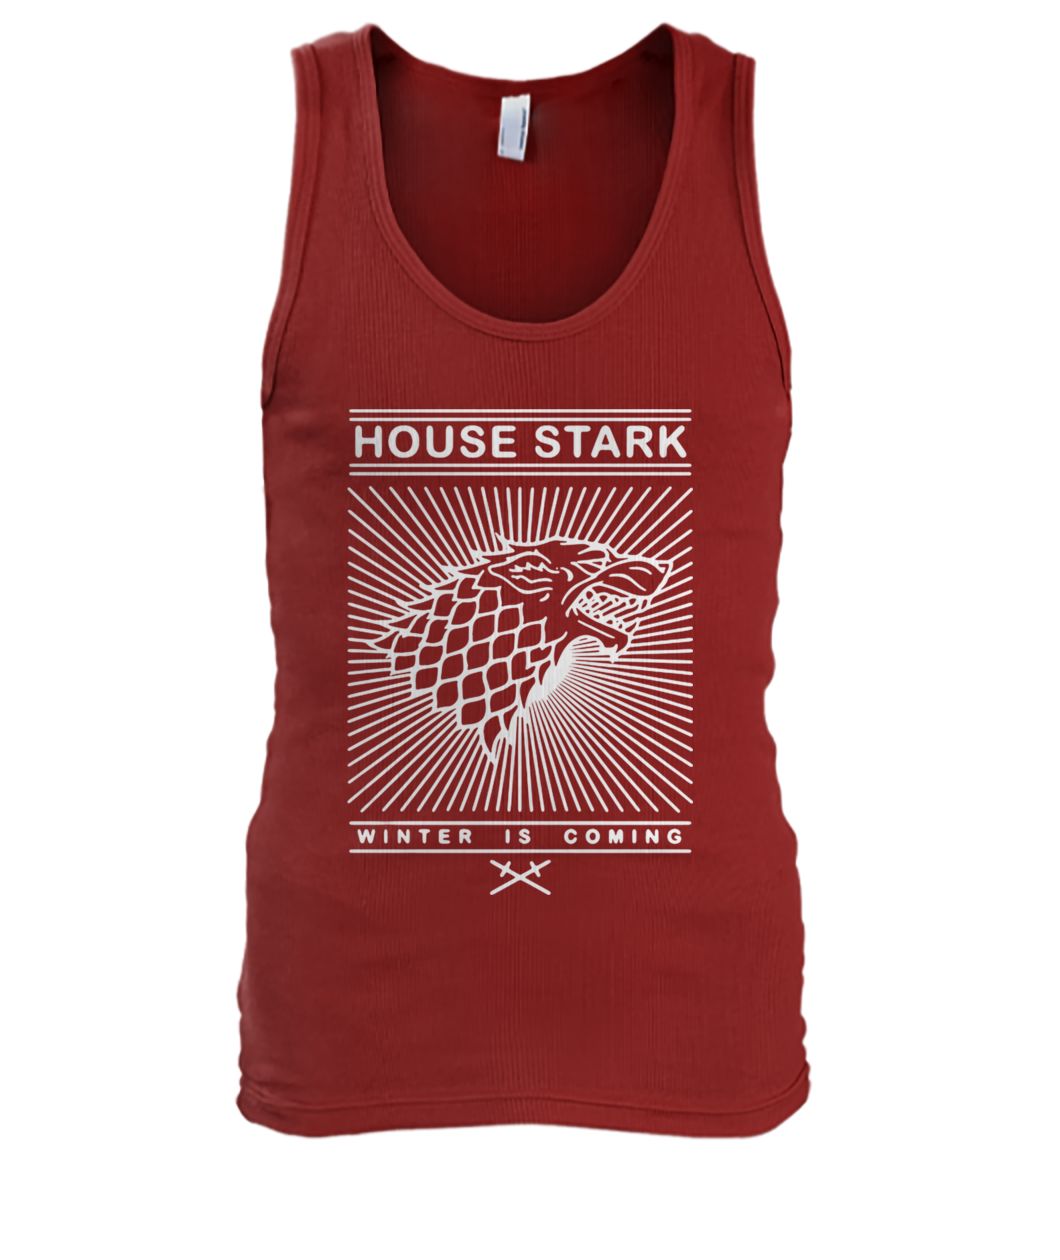 Game of thrones house stark winter is coming men's tank top